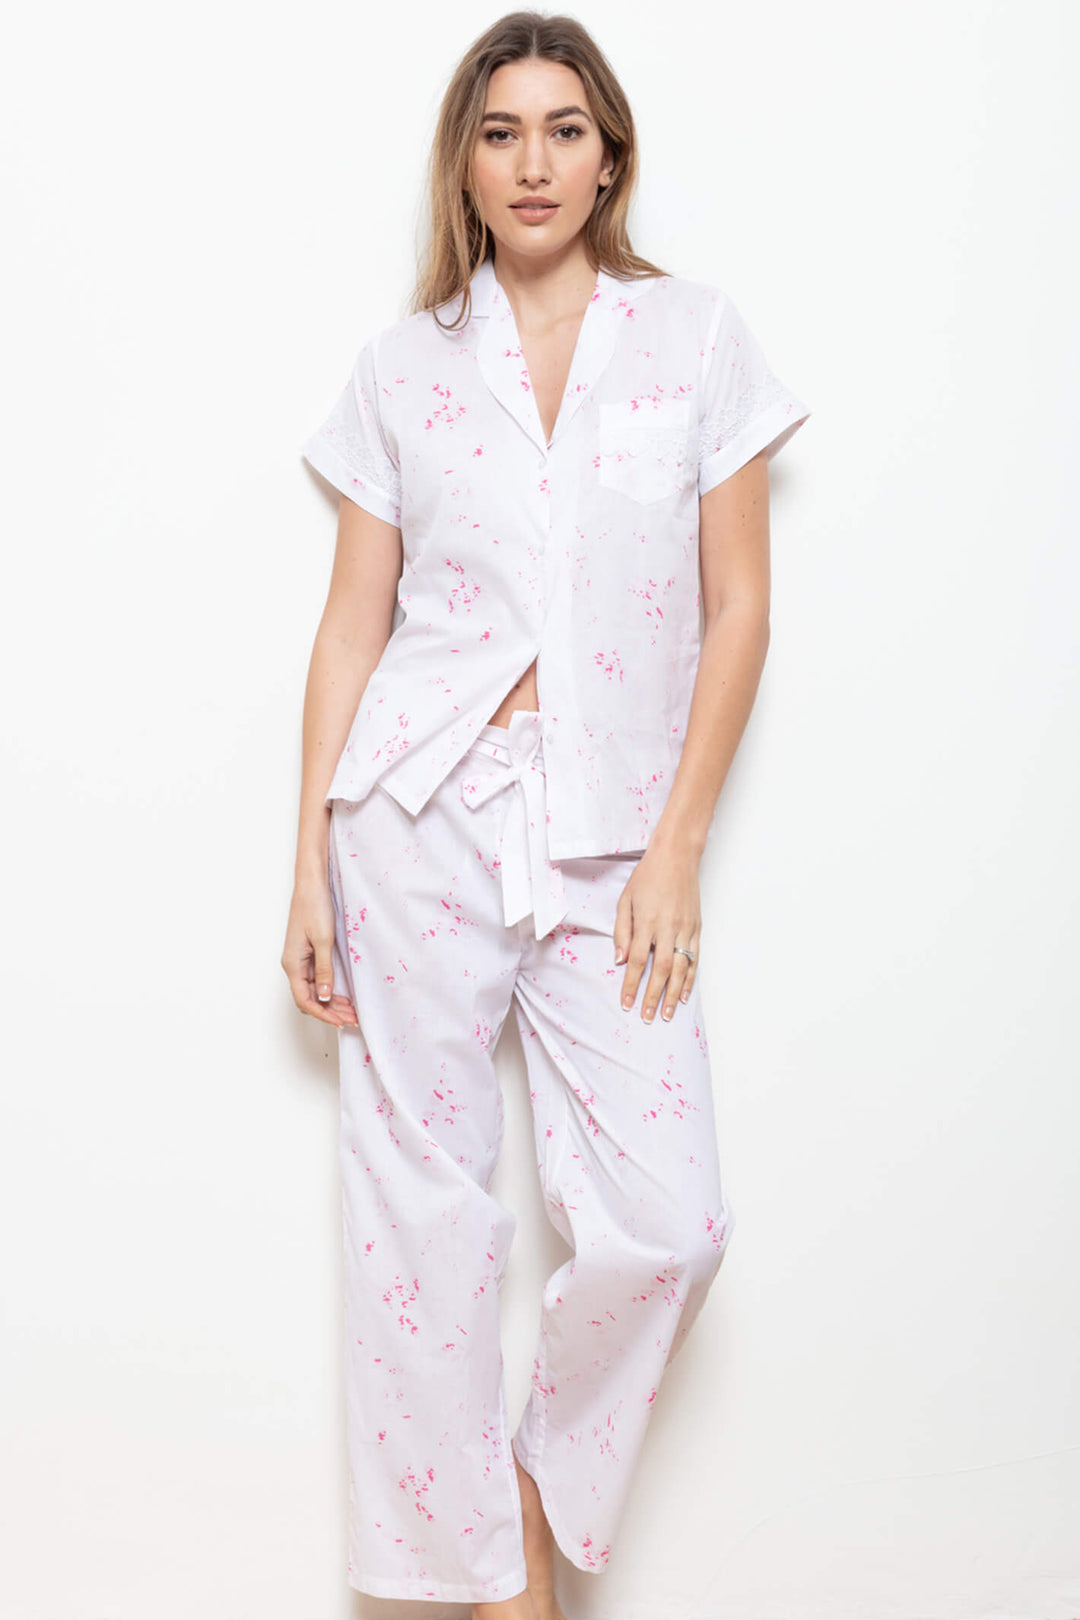 Cottonreal Yoloti Short Sleeve Cotton Lawn Pale Pink PJ Set - Shirley Allum Boutique